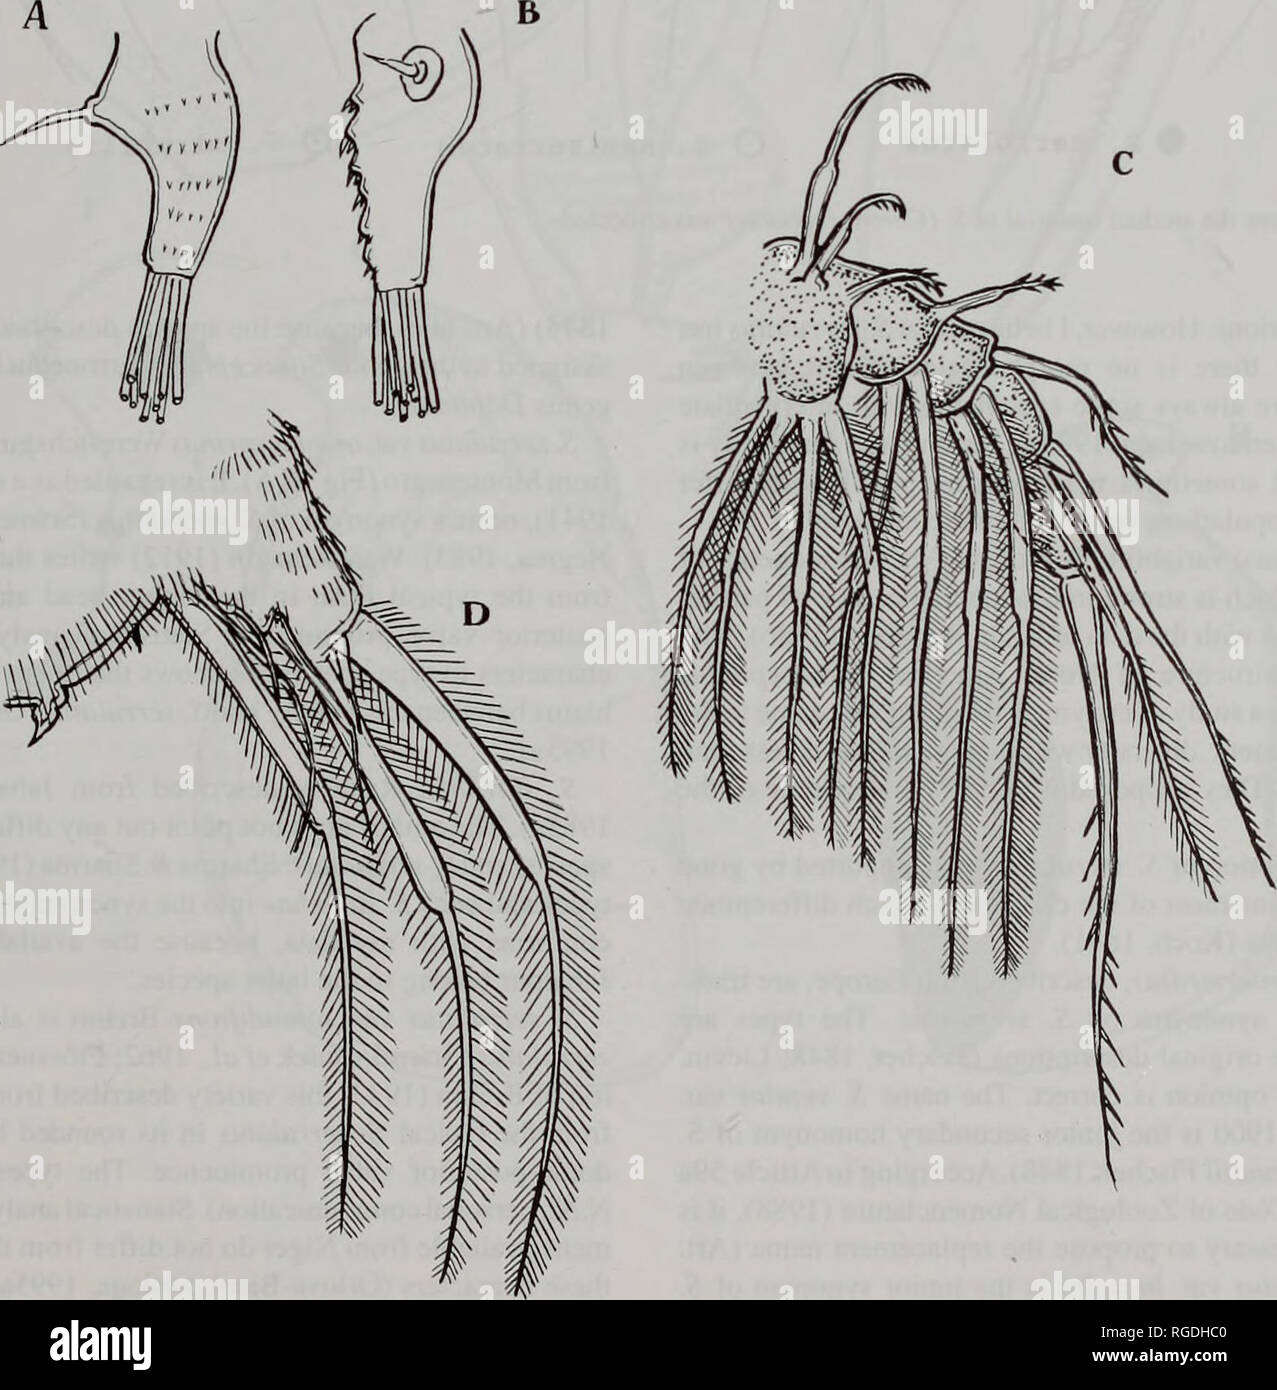 . Bulletin of the Natural History Museum Zoology. REVISION OF SIMOCEPHALUS DAPHNIIDAE 41 5. serrulatus (Koch, 1841) Figs 39-42 Daphnia serrulata Koch, 1841: 35; D. brandtii Fischer, 1848: 177; D. intermedia Lievin, 1848: 29; Simocephalus serrulatus: Schodler, 1858; Simocephalus americanus Birge, 1878; S. capensis Sars, 1895: 15;S. inflatus Vavra, 1900: 12;S. serrulatus var.productions Stingelin, 1904: 57; S. serrulatus var. montenegrinus Werestchagin, 1912: 7; 5. serrulatus var. mixta Grochmalicki, 1915: 220 (nee 5. mixtus Sars, 1903); S. serrulatus var. rotundifrons Brehm, 1933: 54; S. kerher Stock Photo